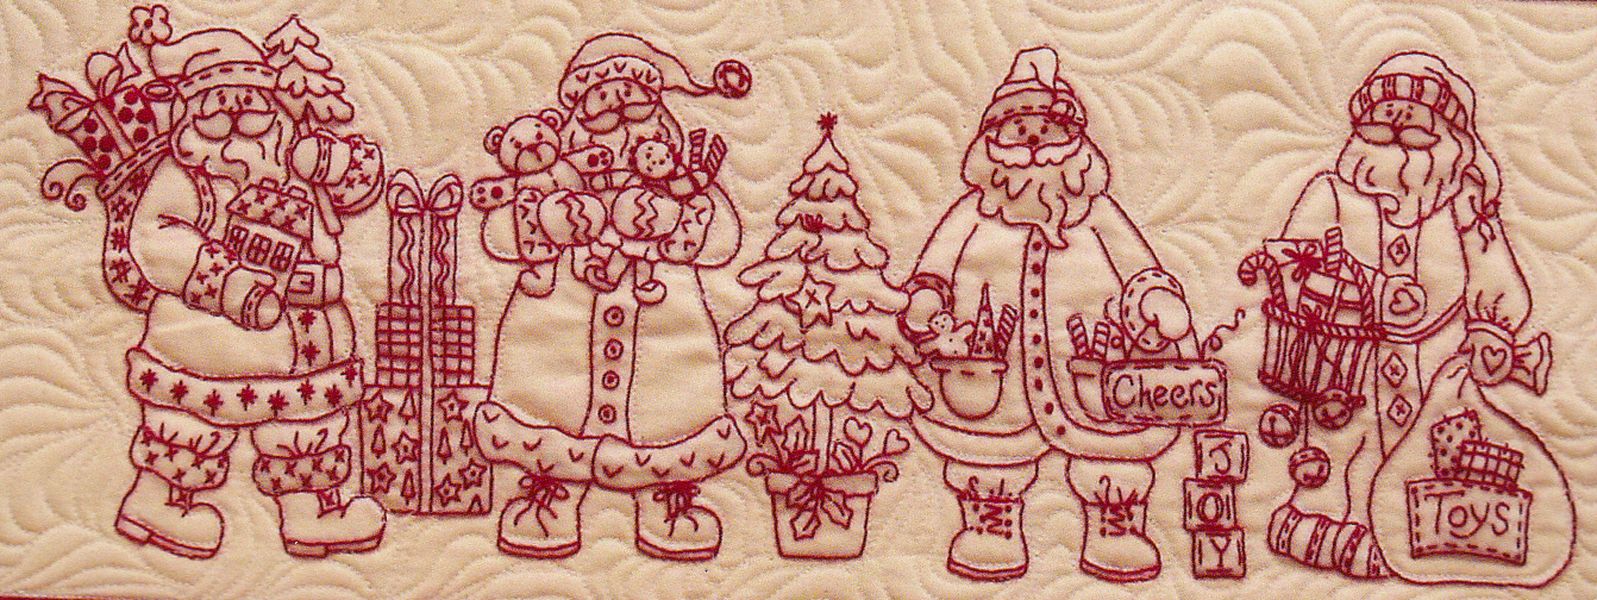 Santa Quartet Table Runner Embroidery Quilt Pattern by Robin Kingsley of Bird Brain Designs